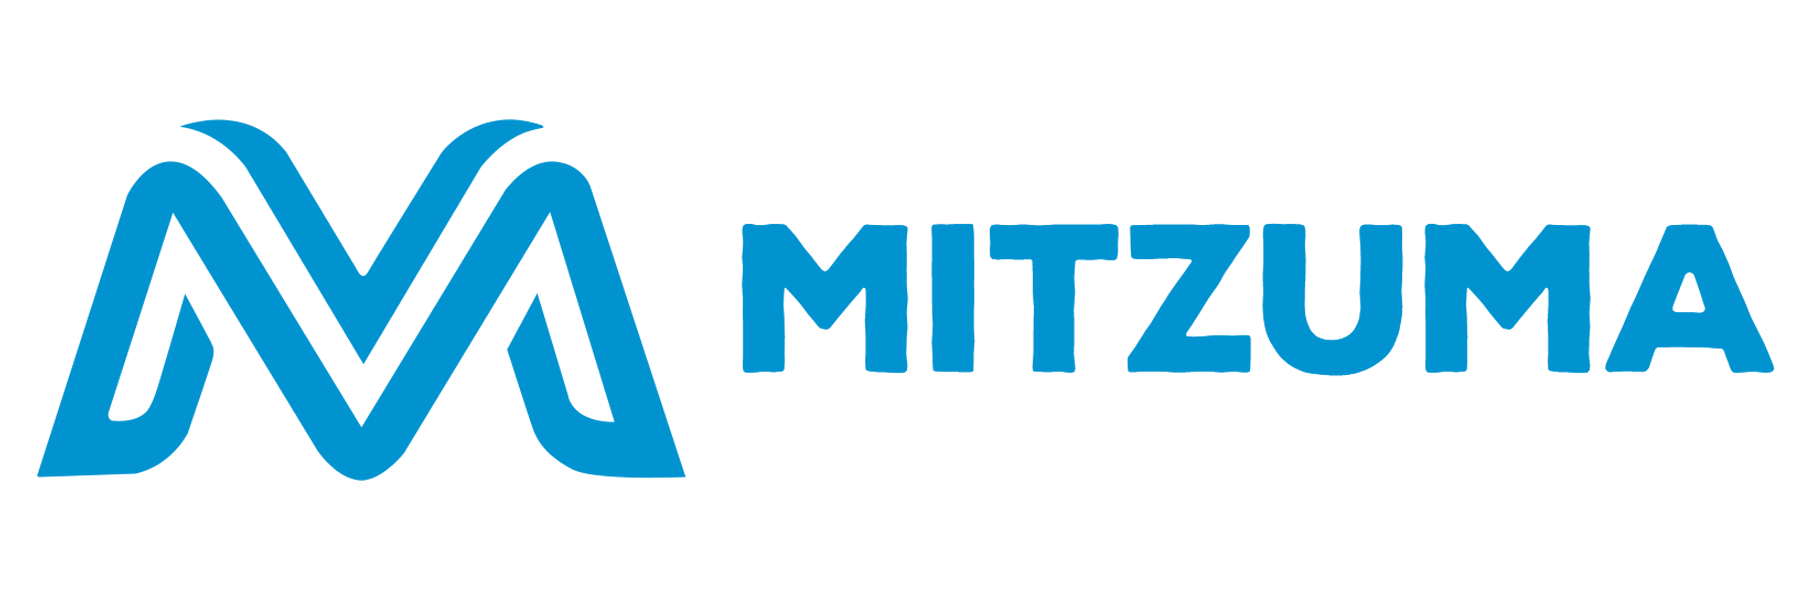 Mitzuma Logo